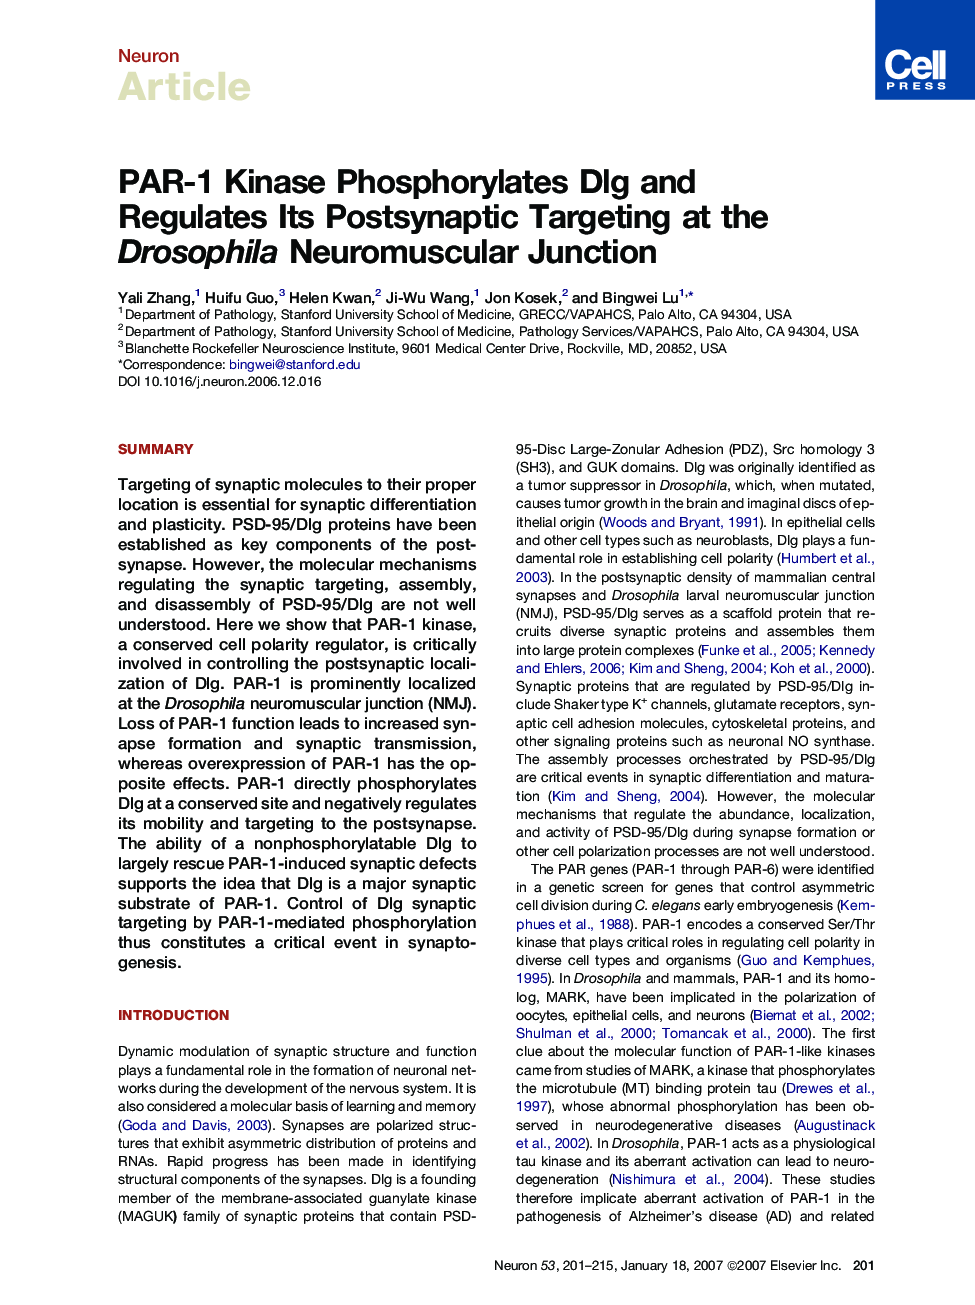 PAR-1 Kinase Phosphorylates Dlg and Regulates Its Postsynaptic Targeting at the Drosophila Neuromuscular Junction